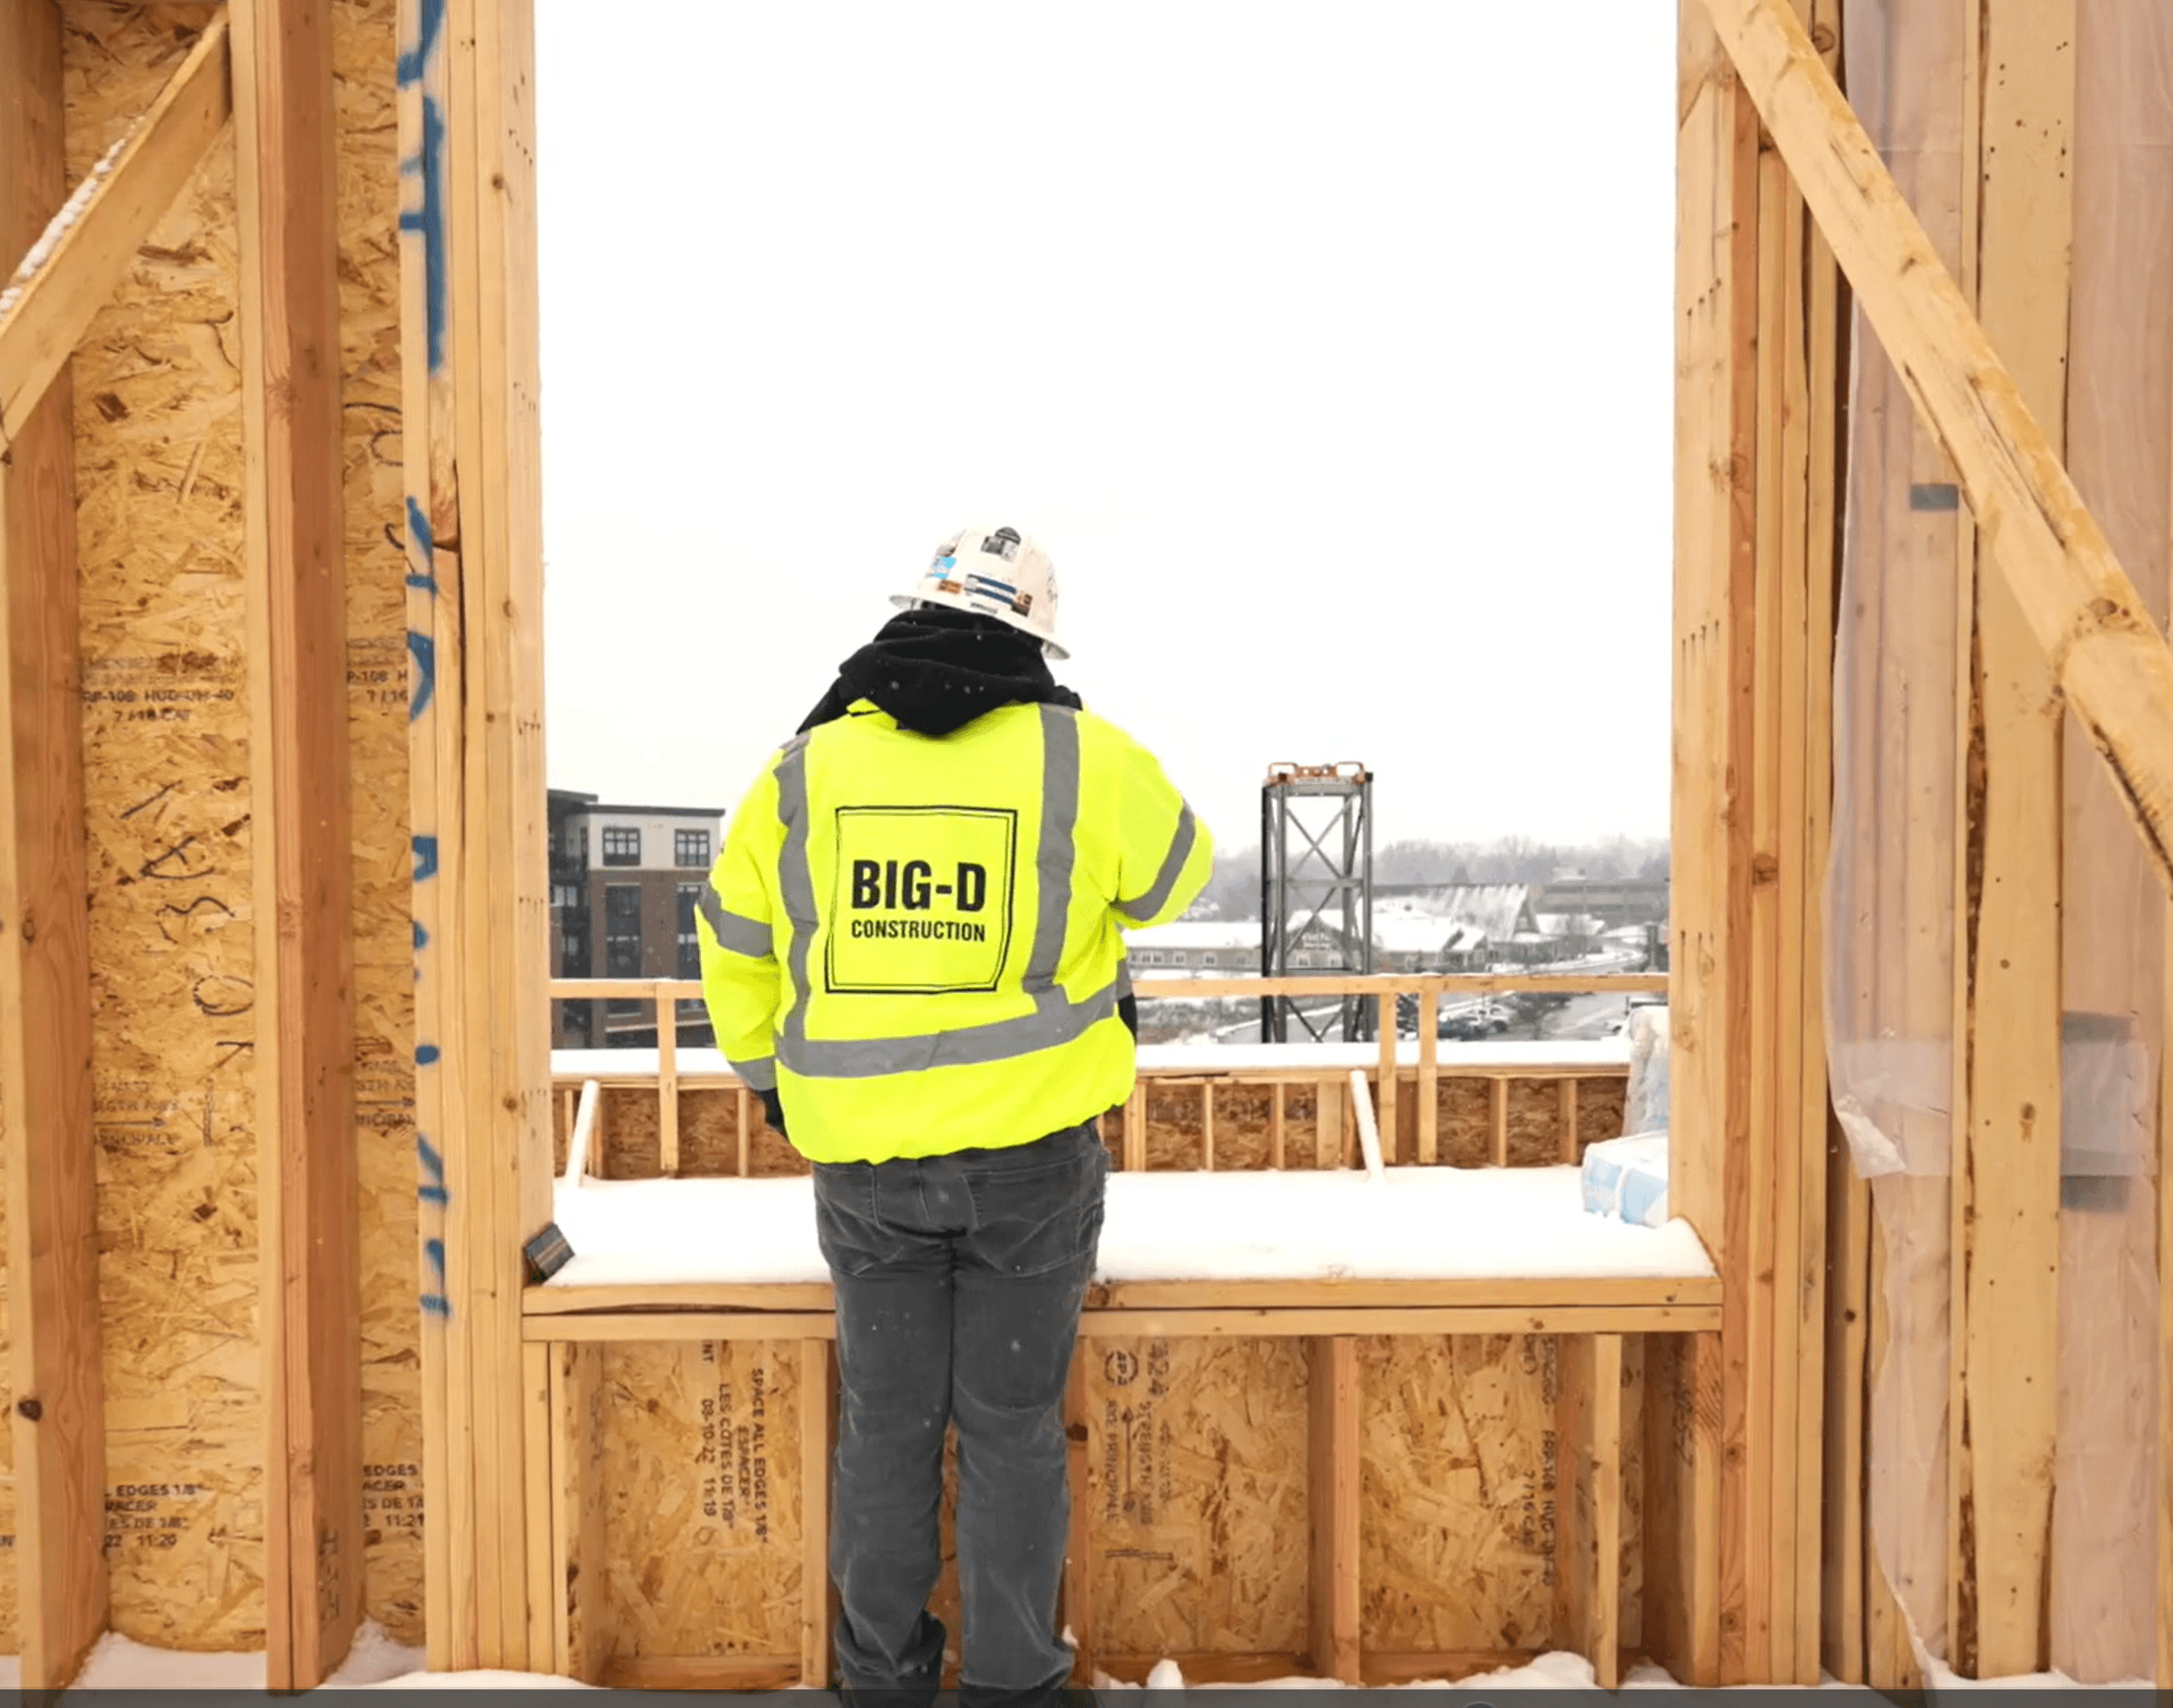 Big-D Construction Superintendent supervising through a window on a jobsite.